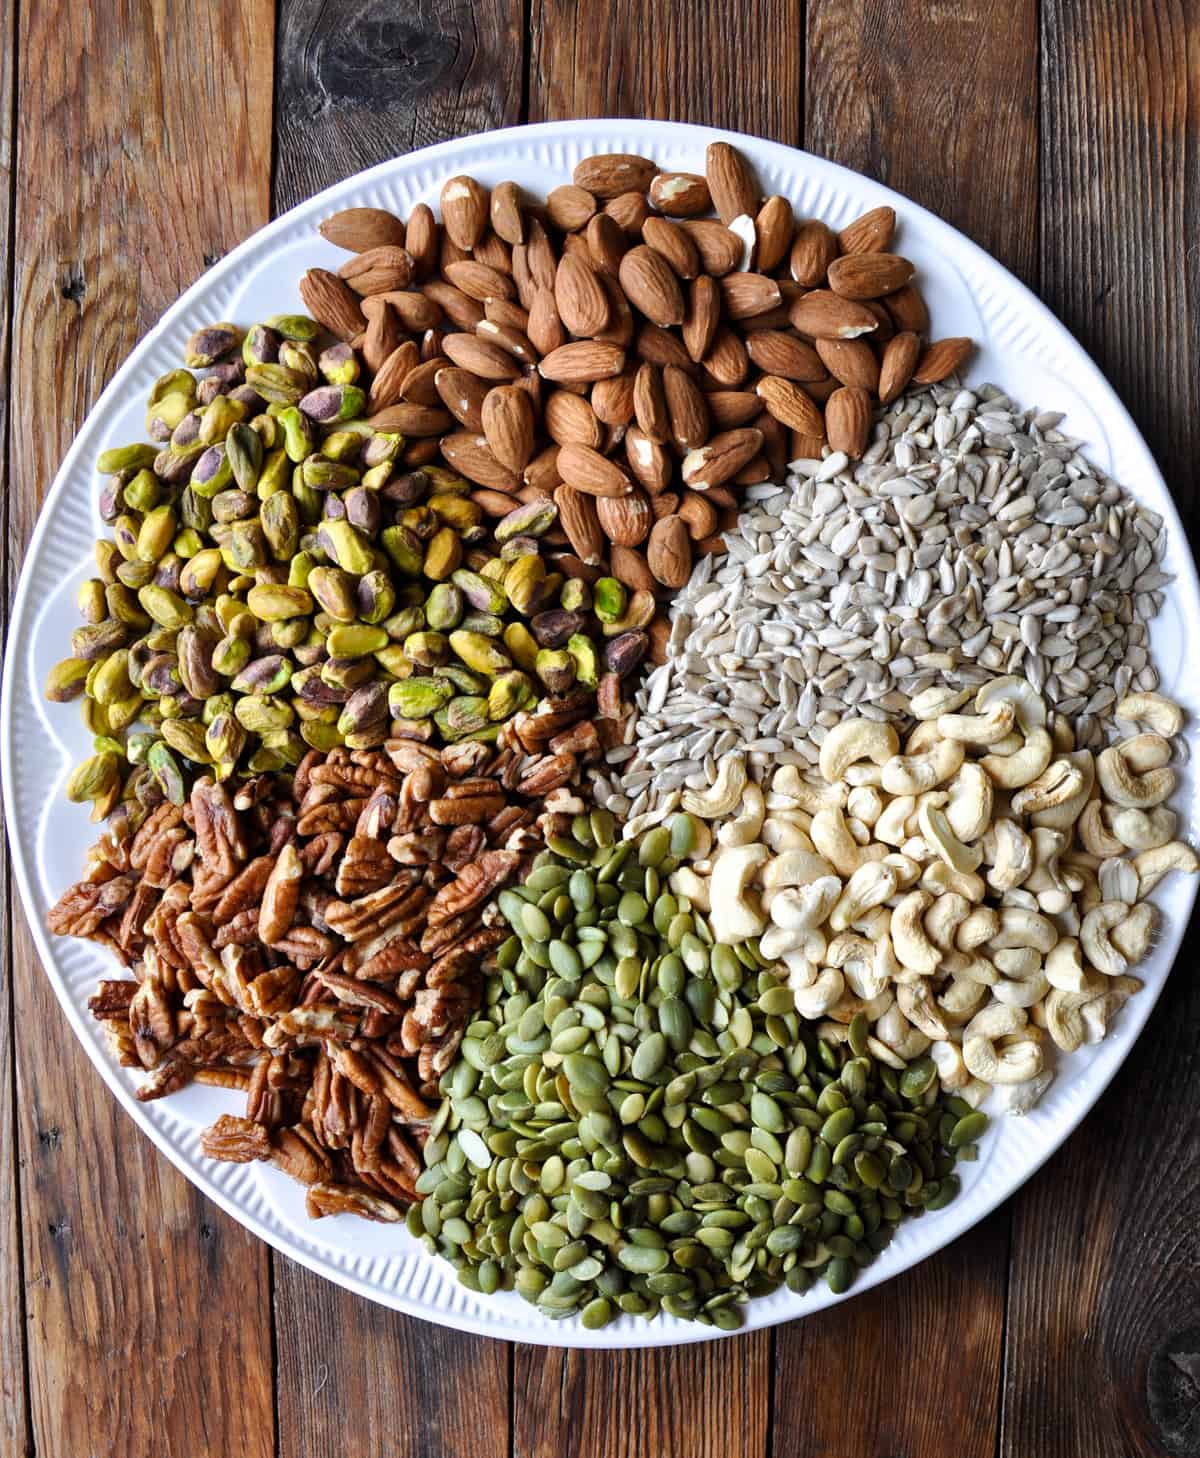 Nuts:  Pecans, almonds, pistachios, sunflower seeds and pumpkin seeds (pepitas).